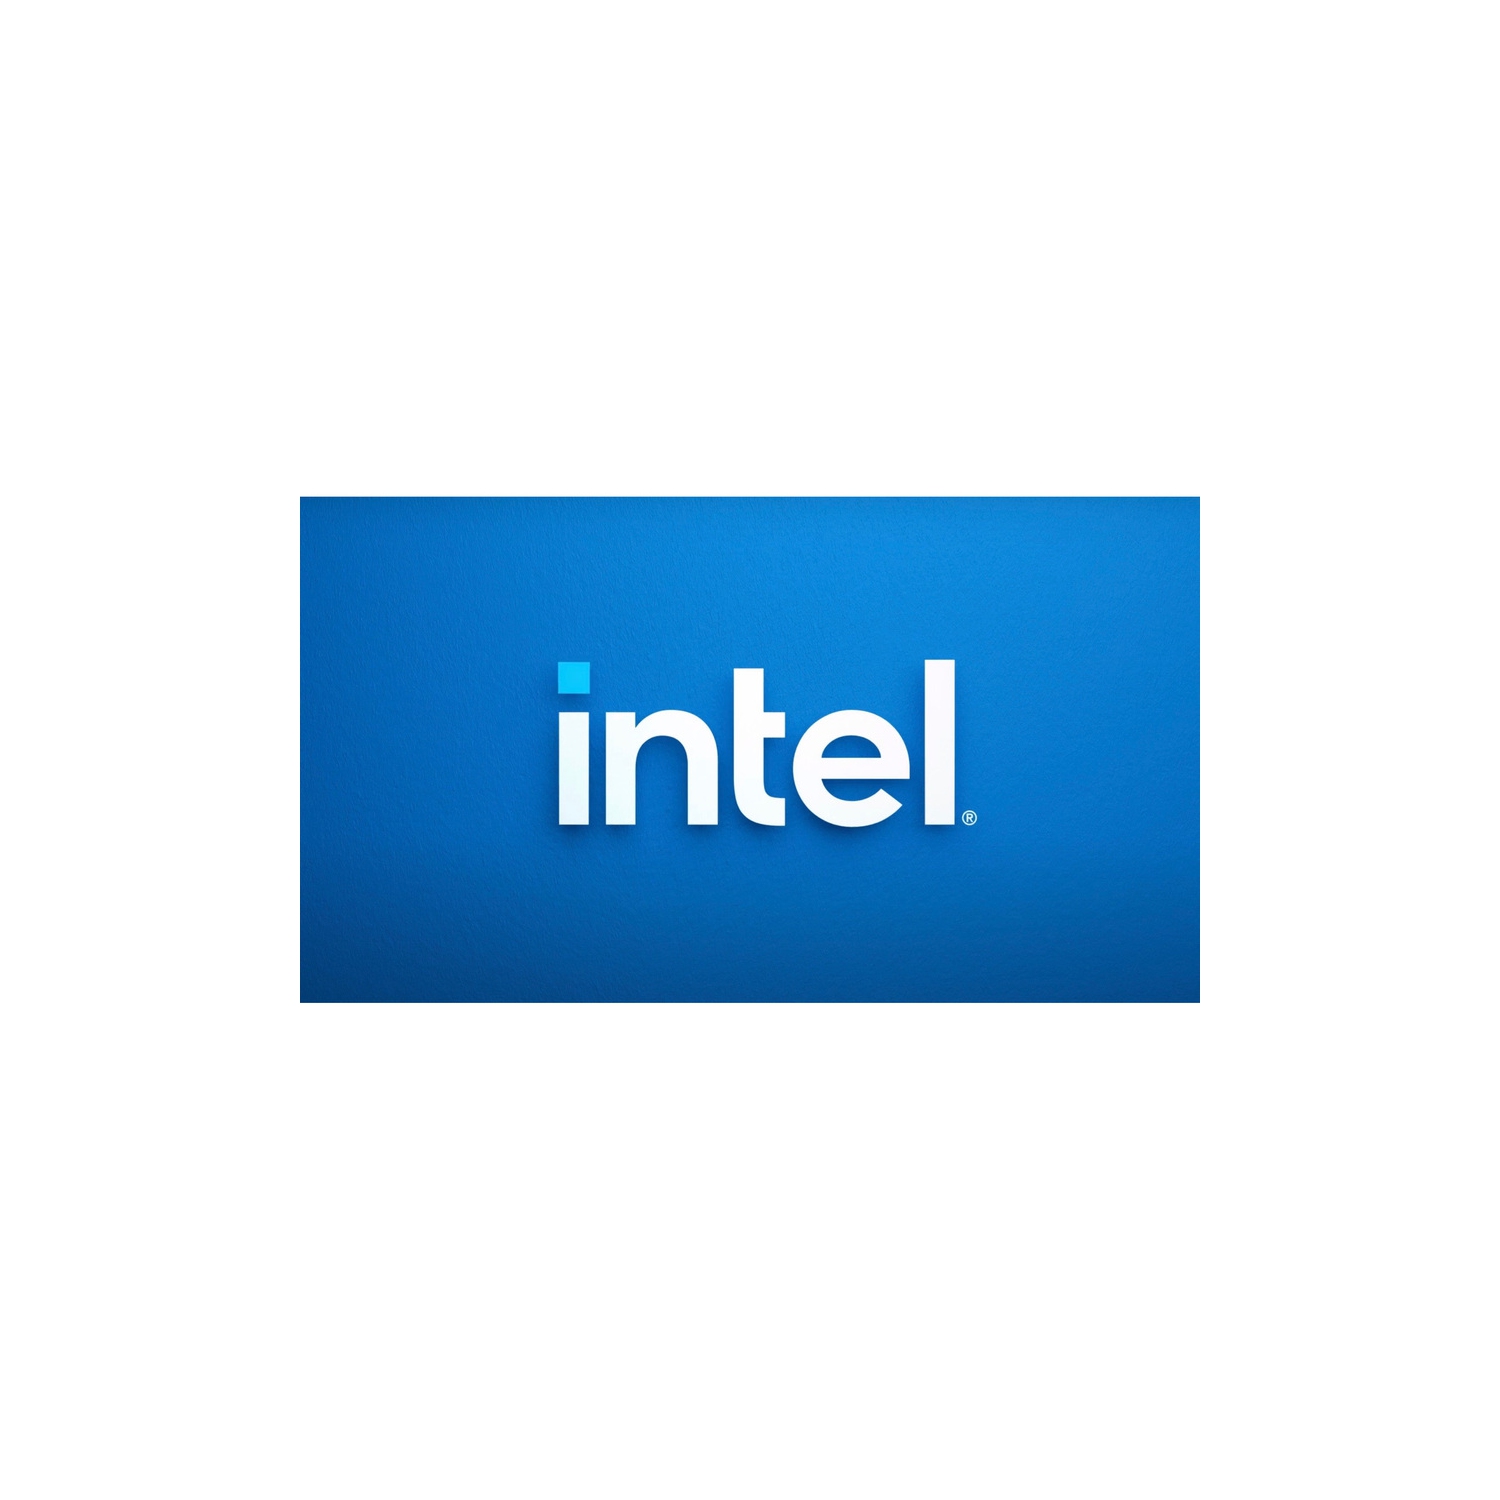 Intel Core 11600k